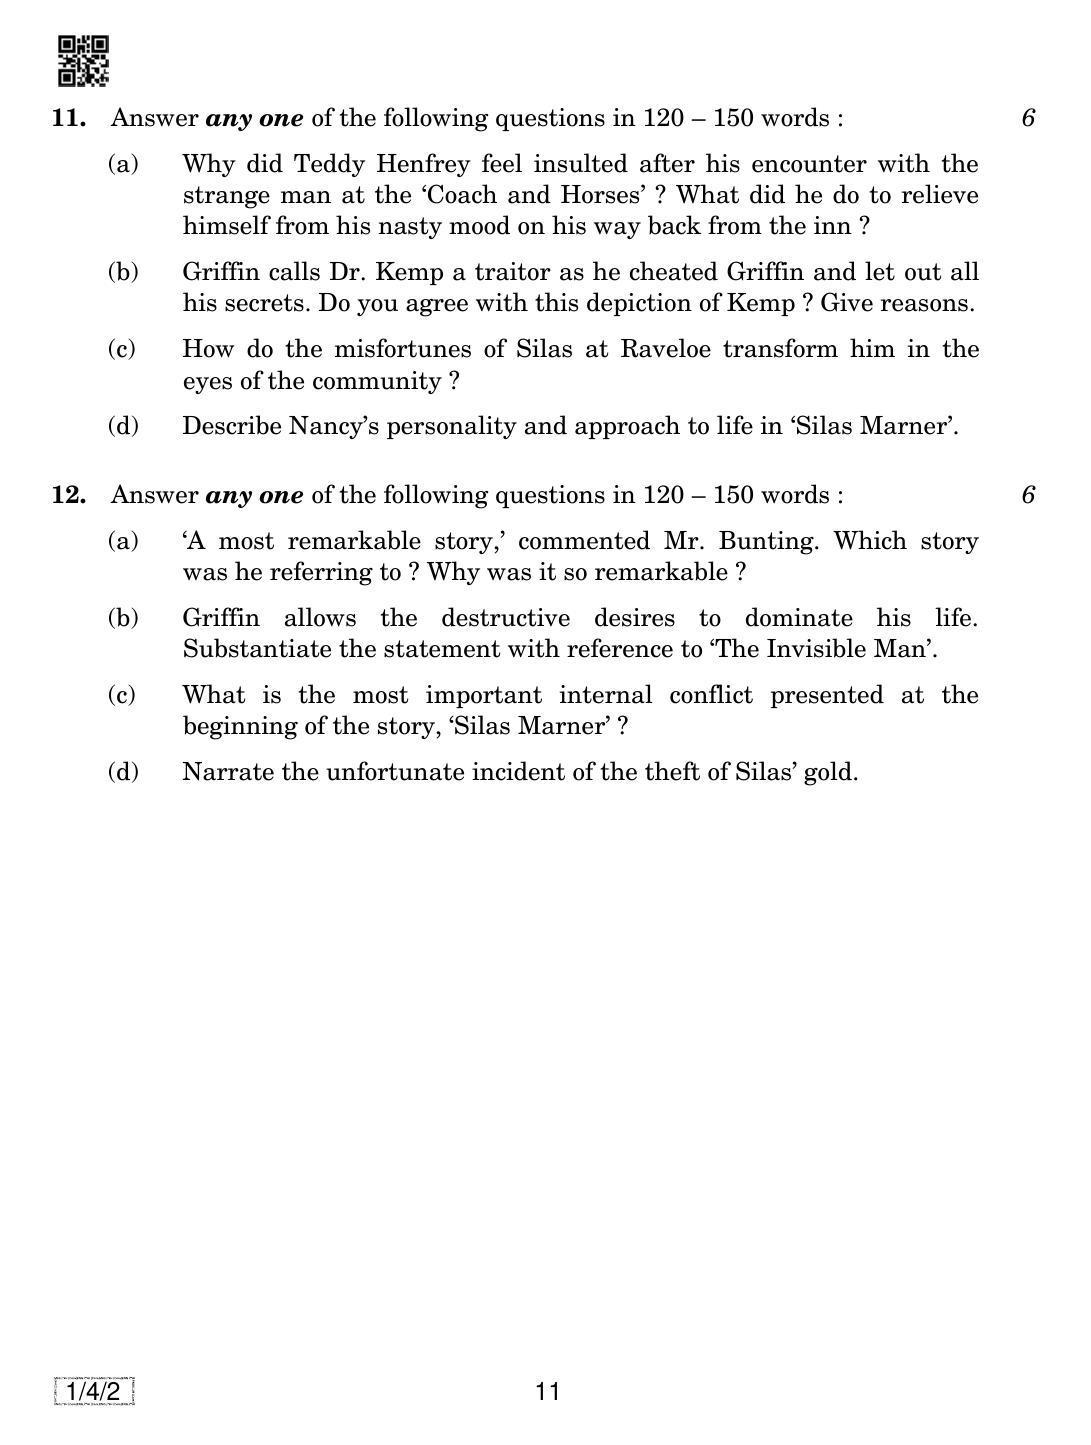 CBSE Class 12 1-4-2 English Core 2019 Question Paper - Page 11